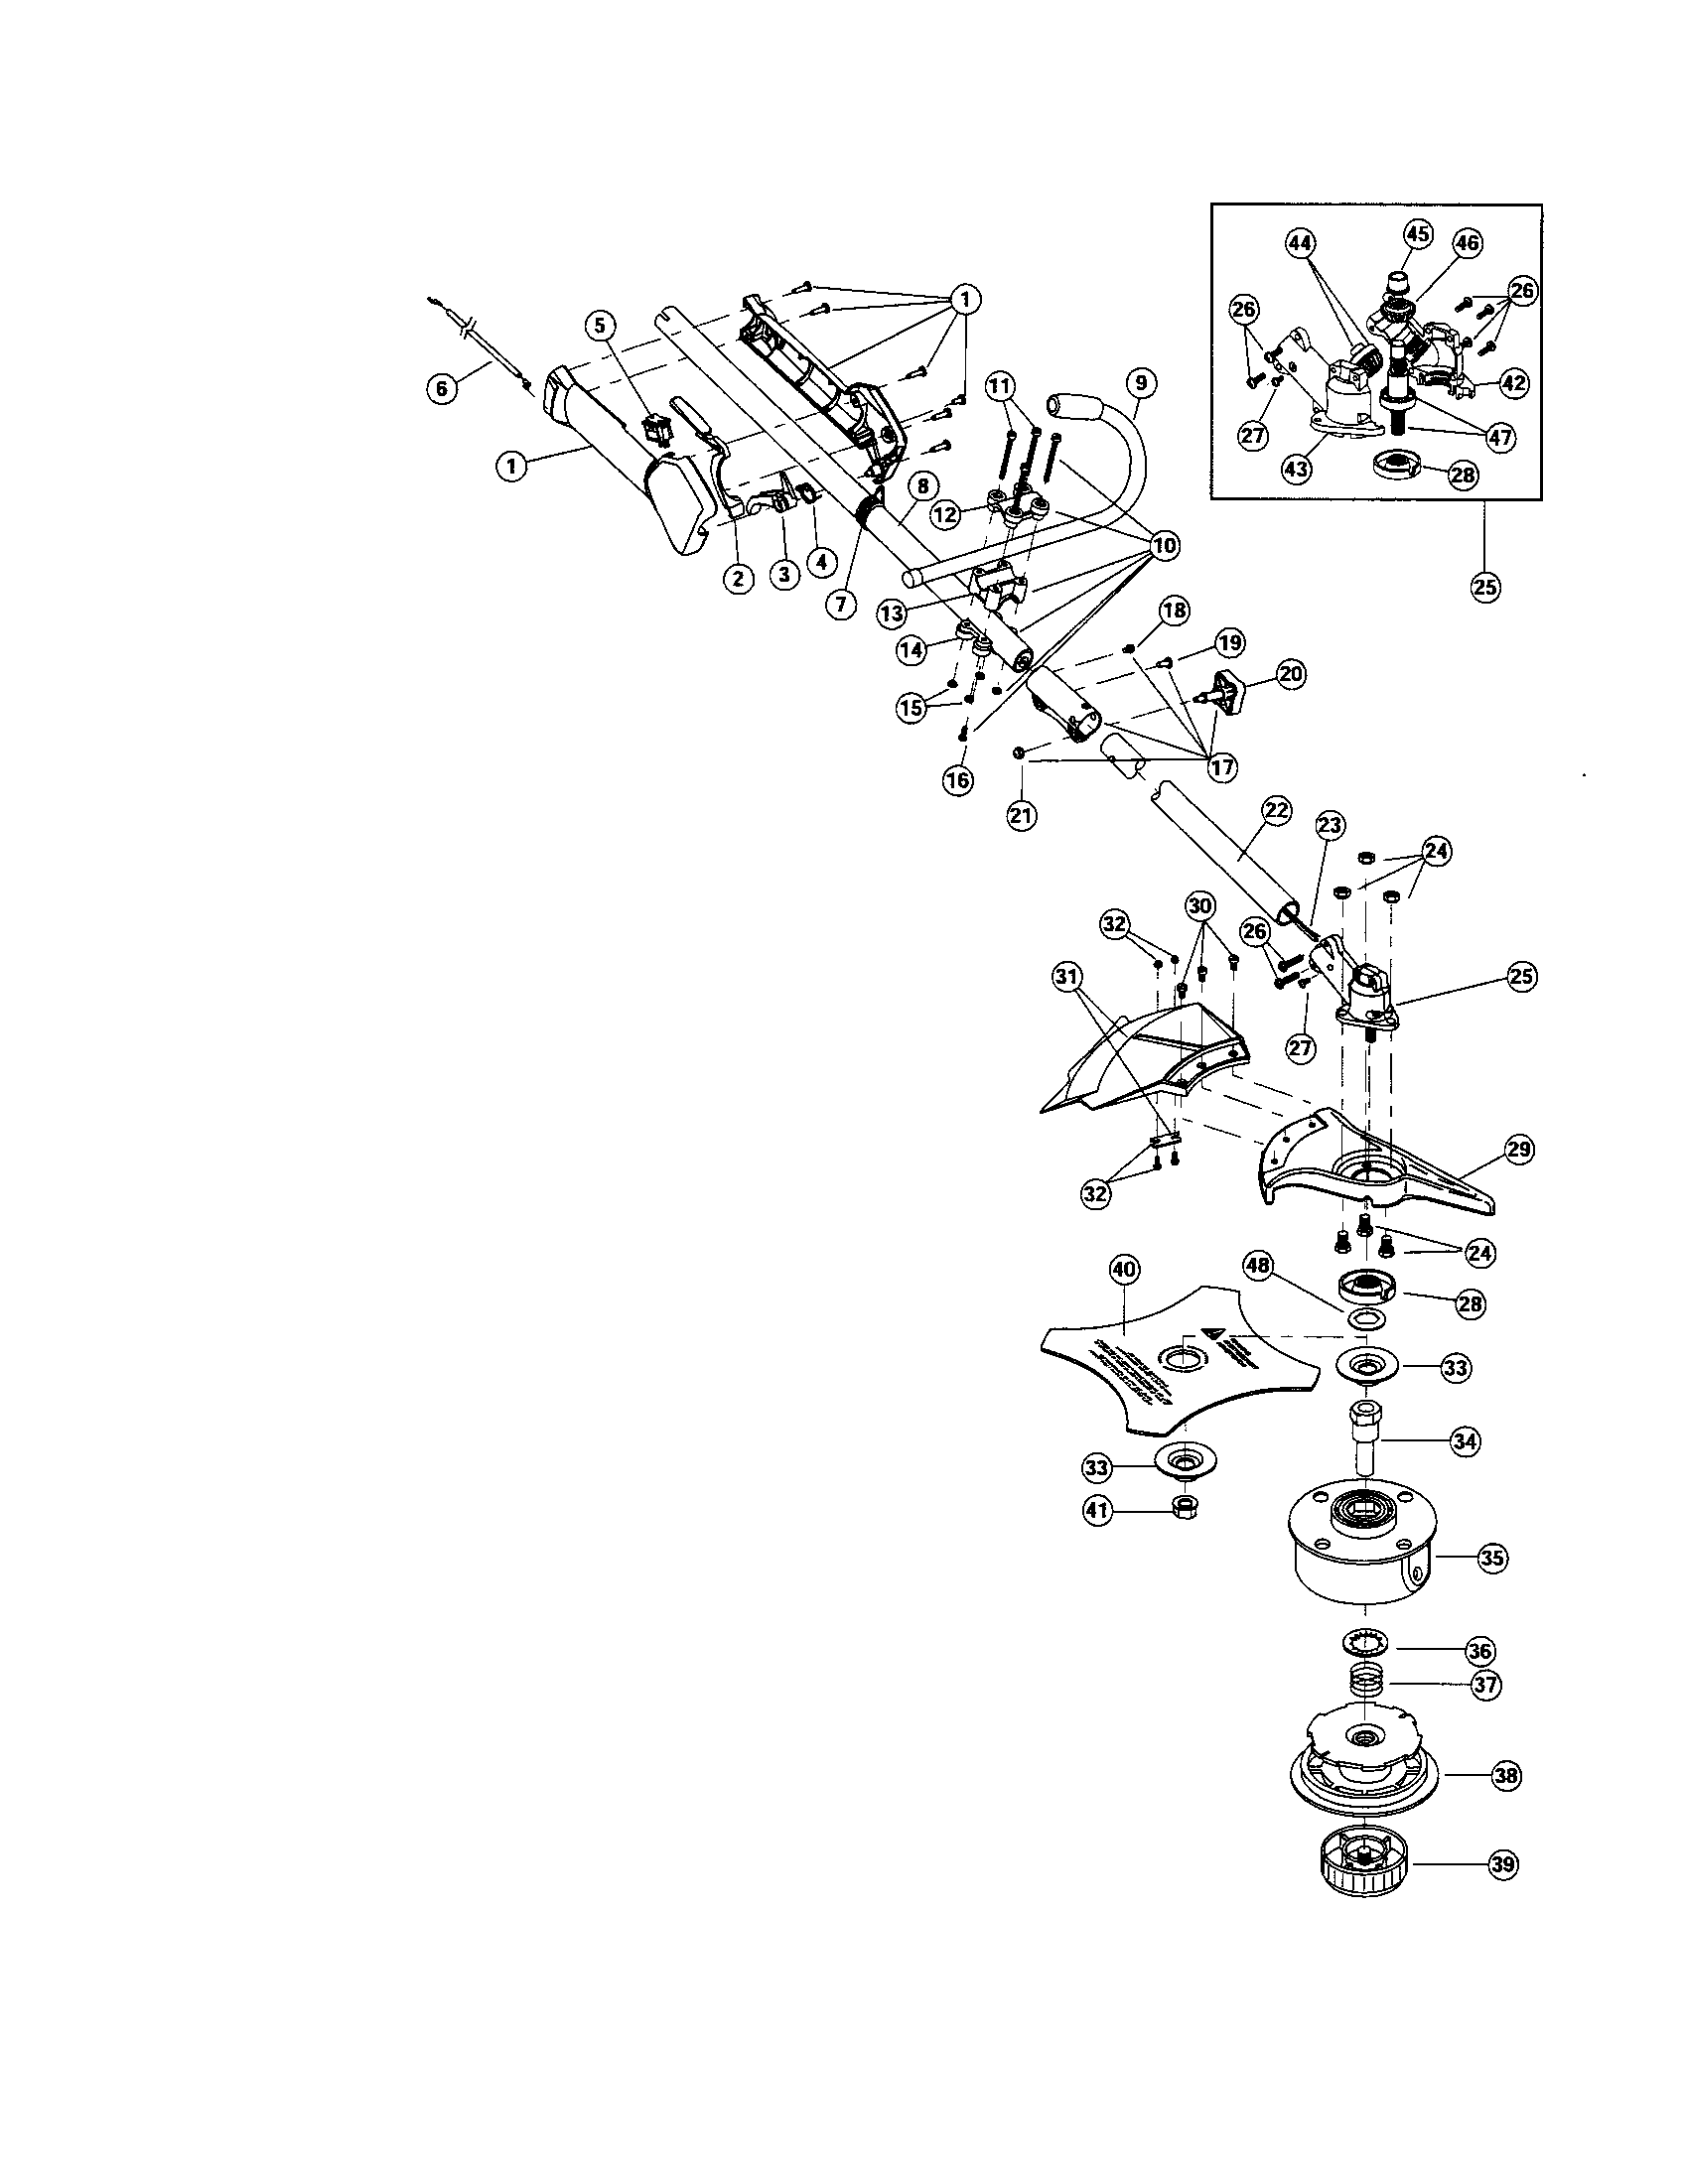 Ryobi 790r Parts Diagram - Wiring Diagram